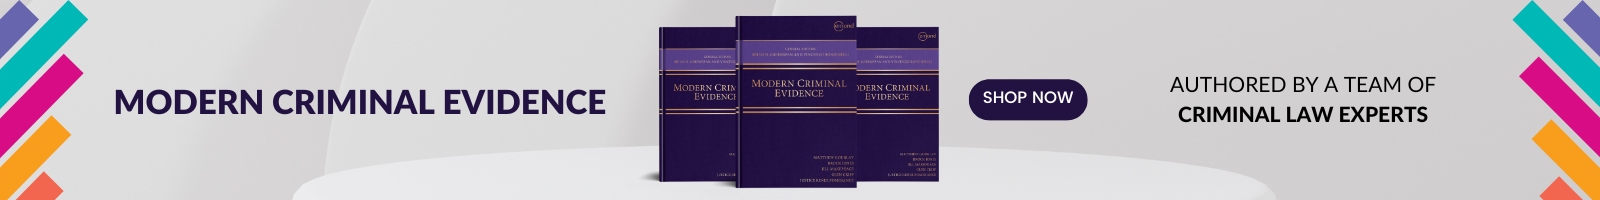 Modern Criminal Evidence Banner